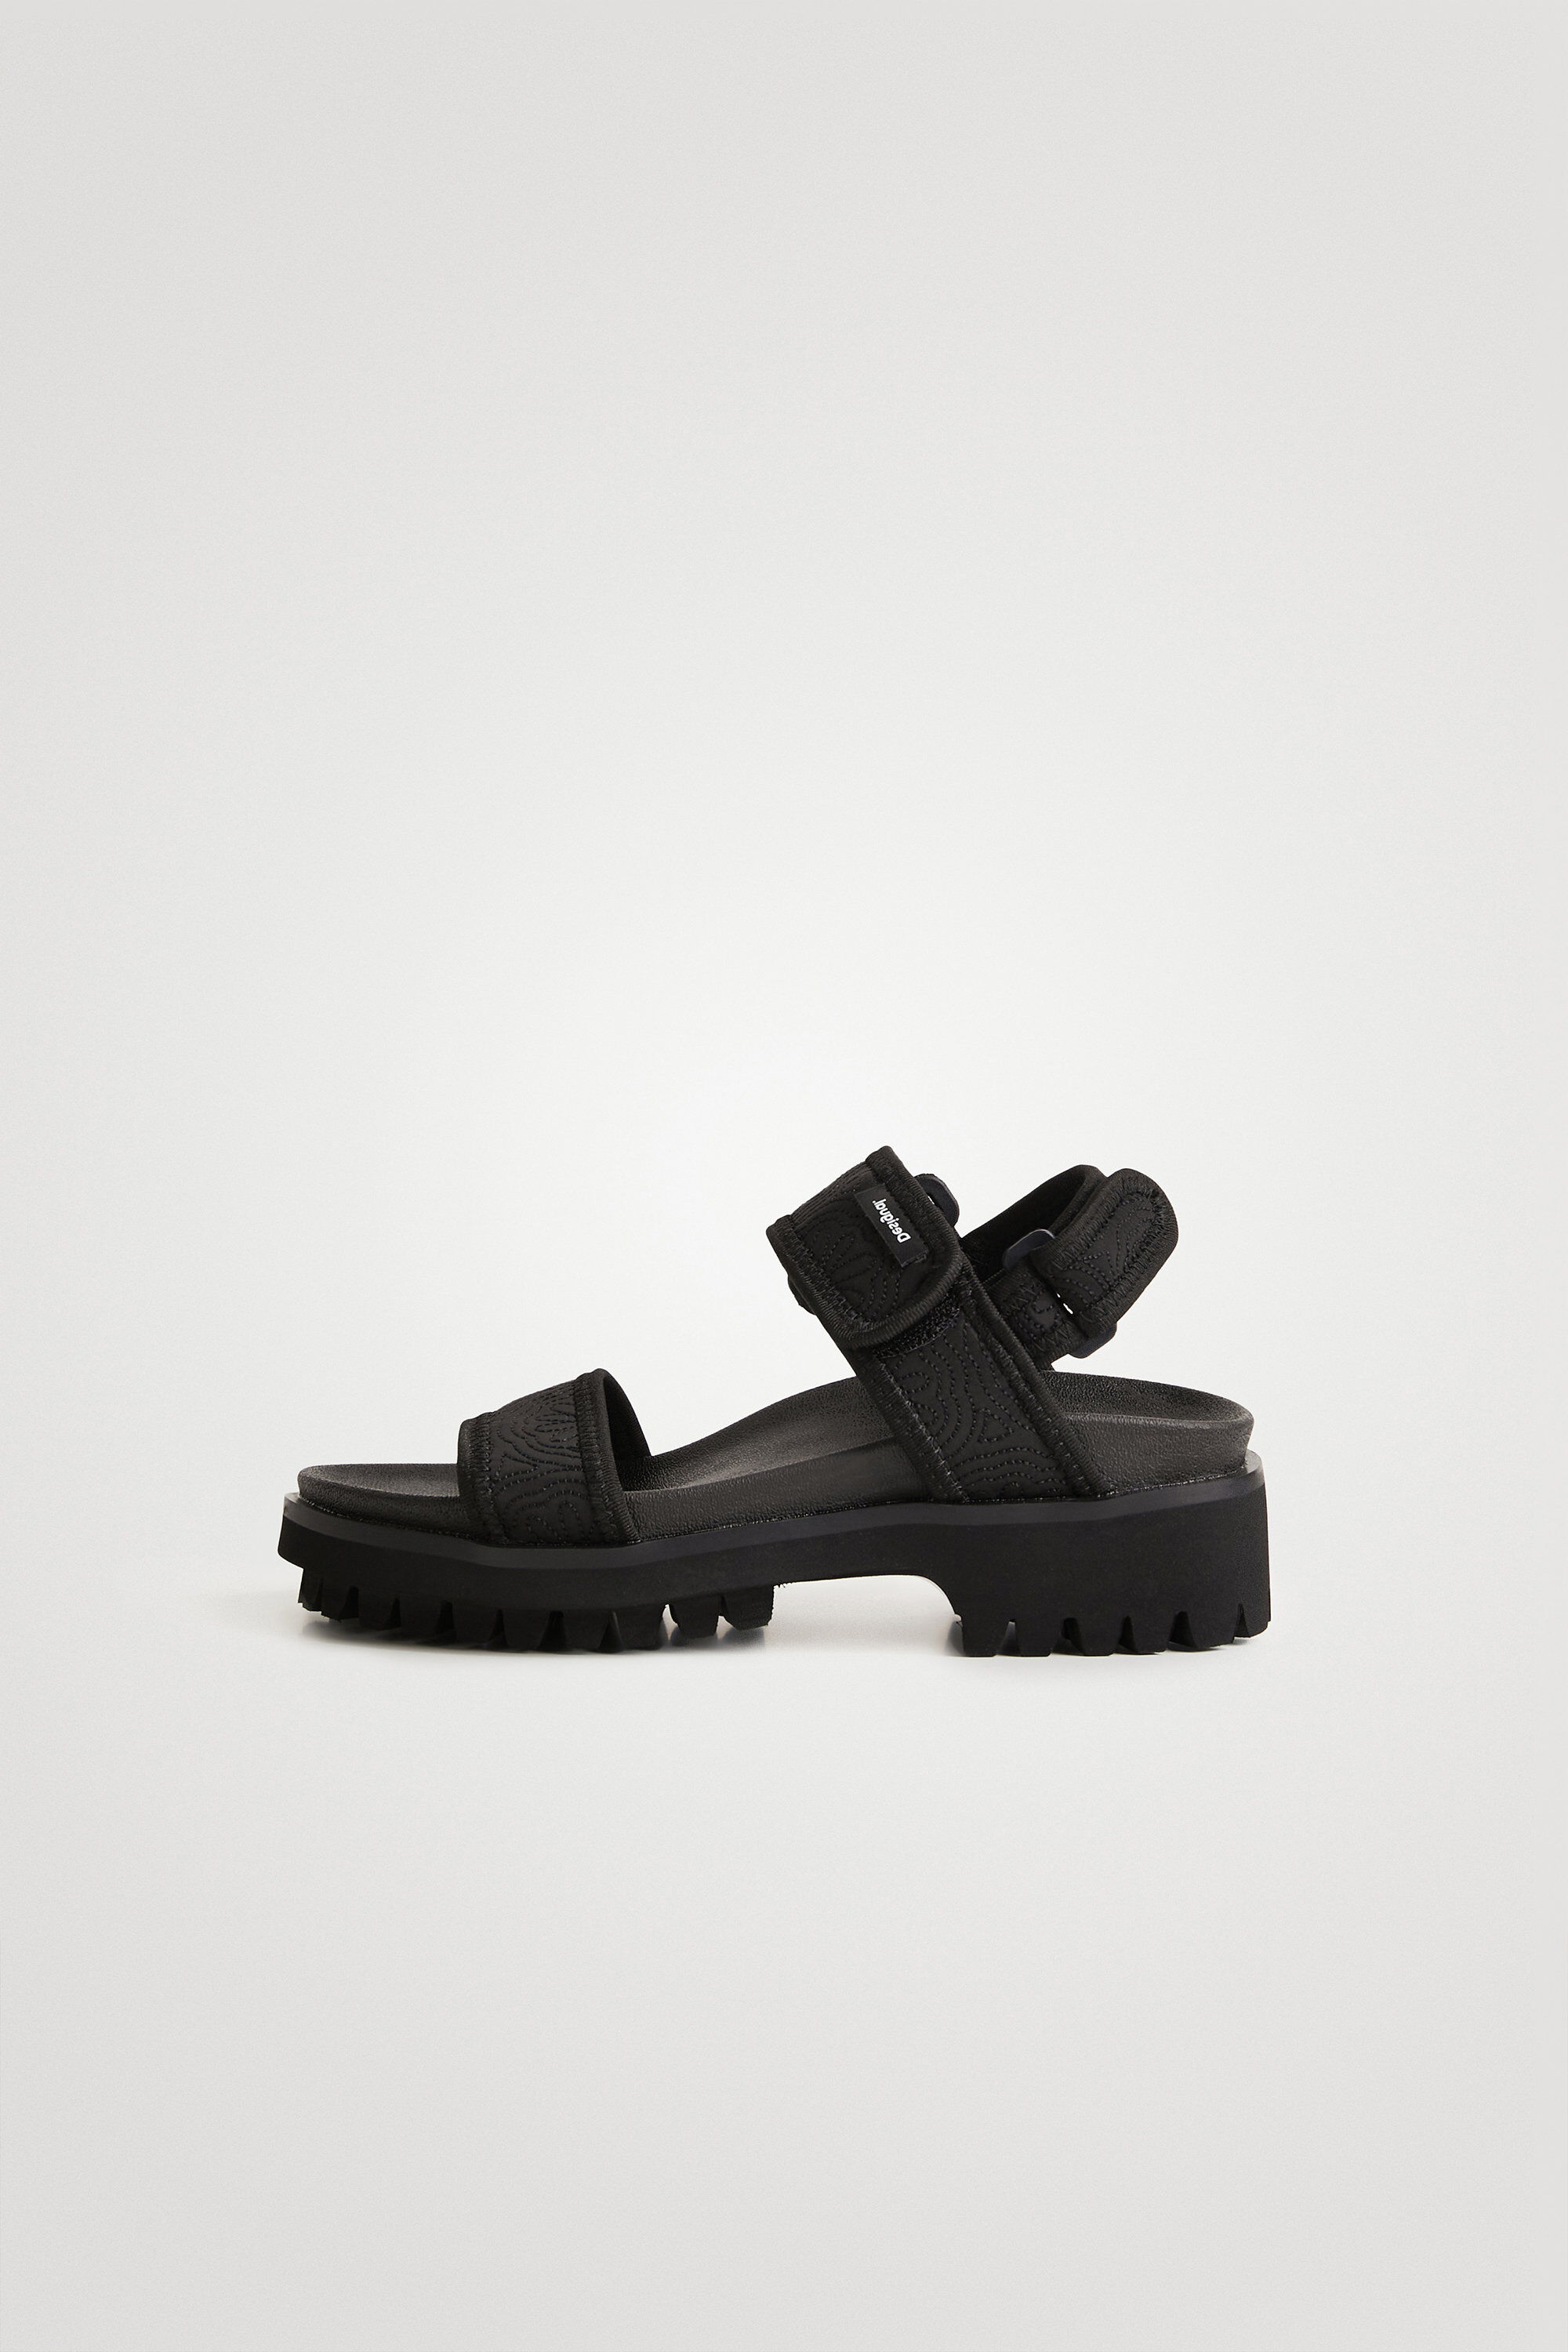 Desigual Black Neoprene Trekking Sandals